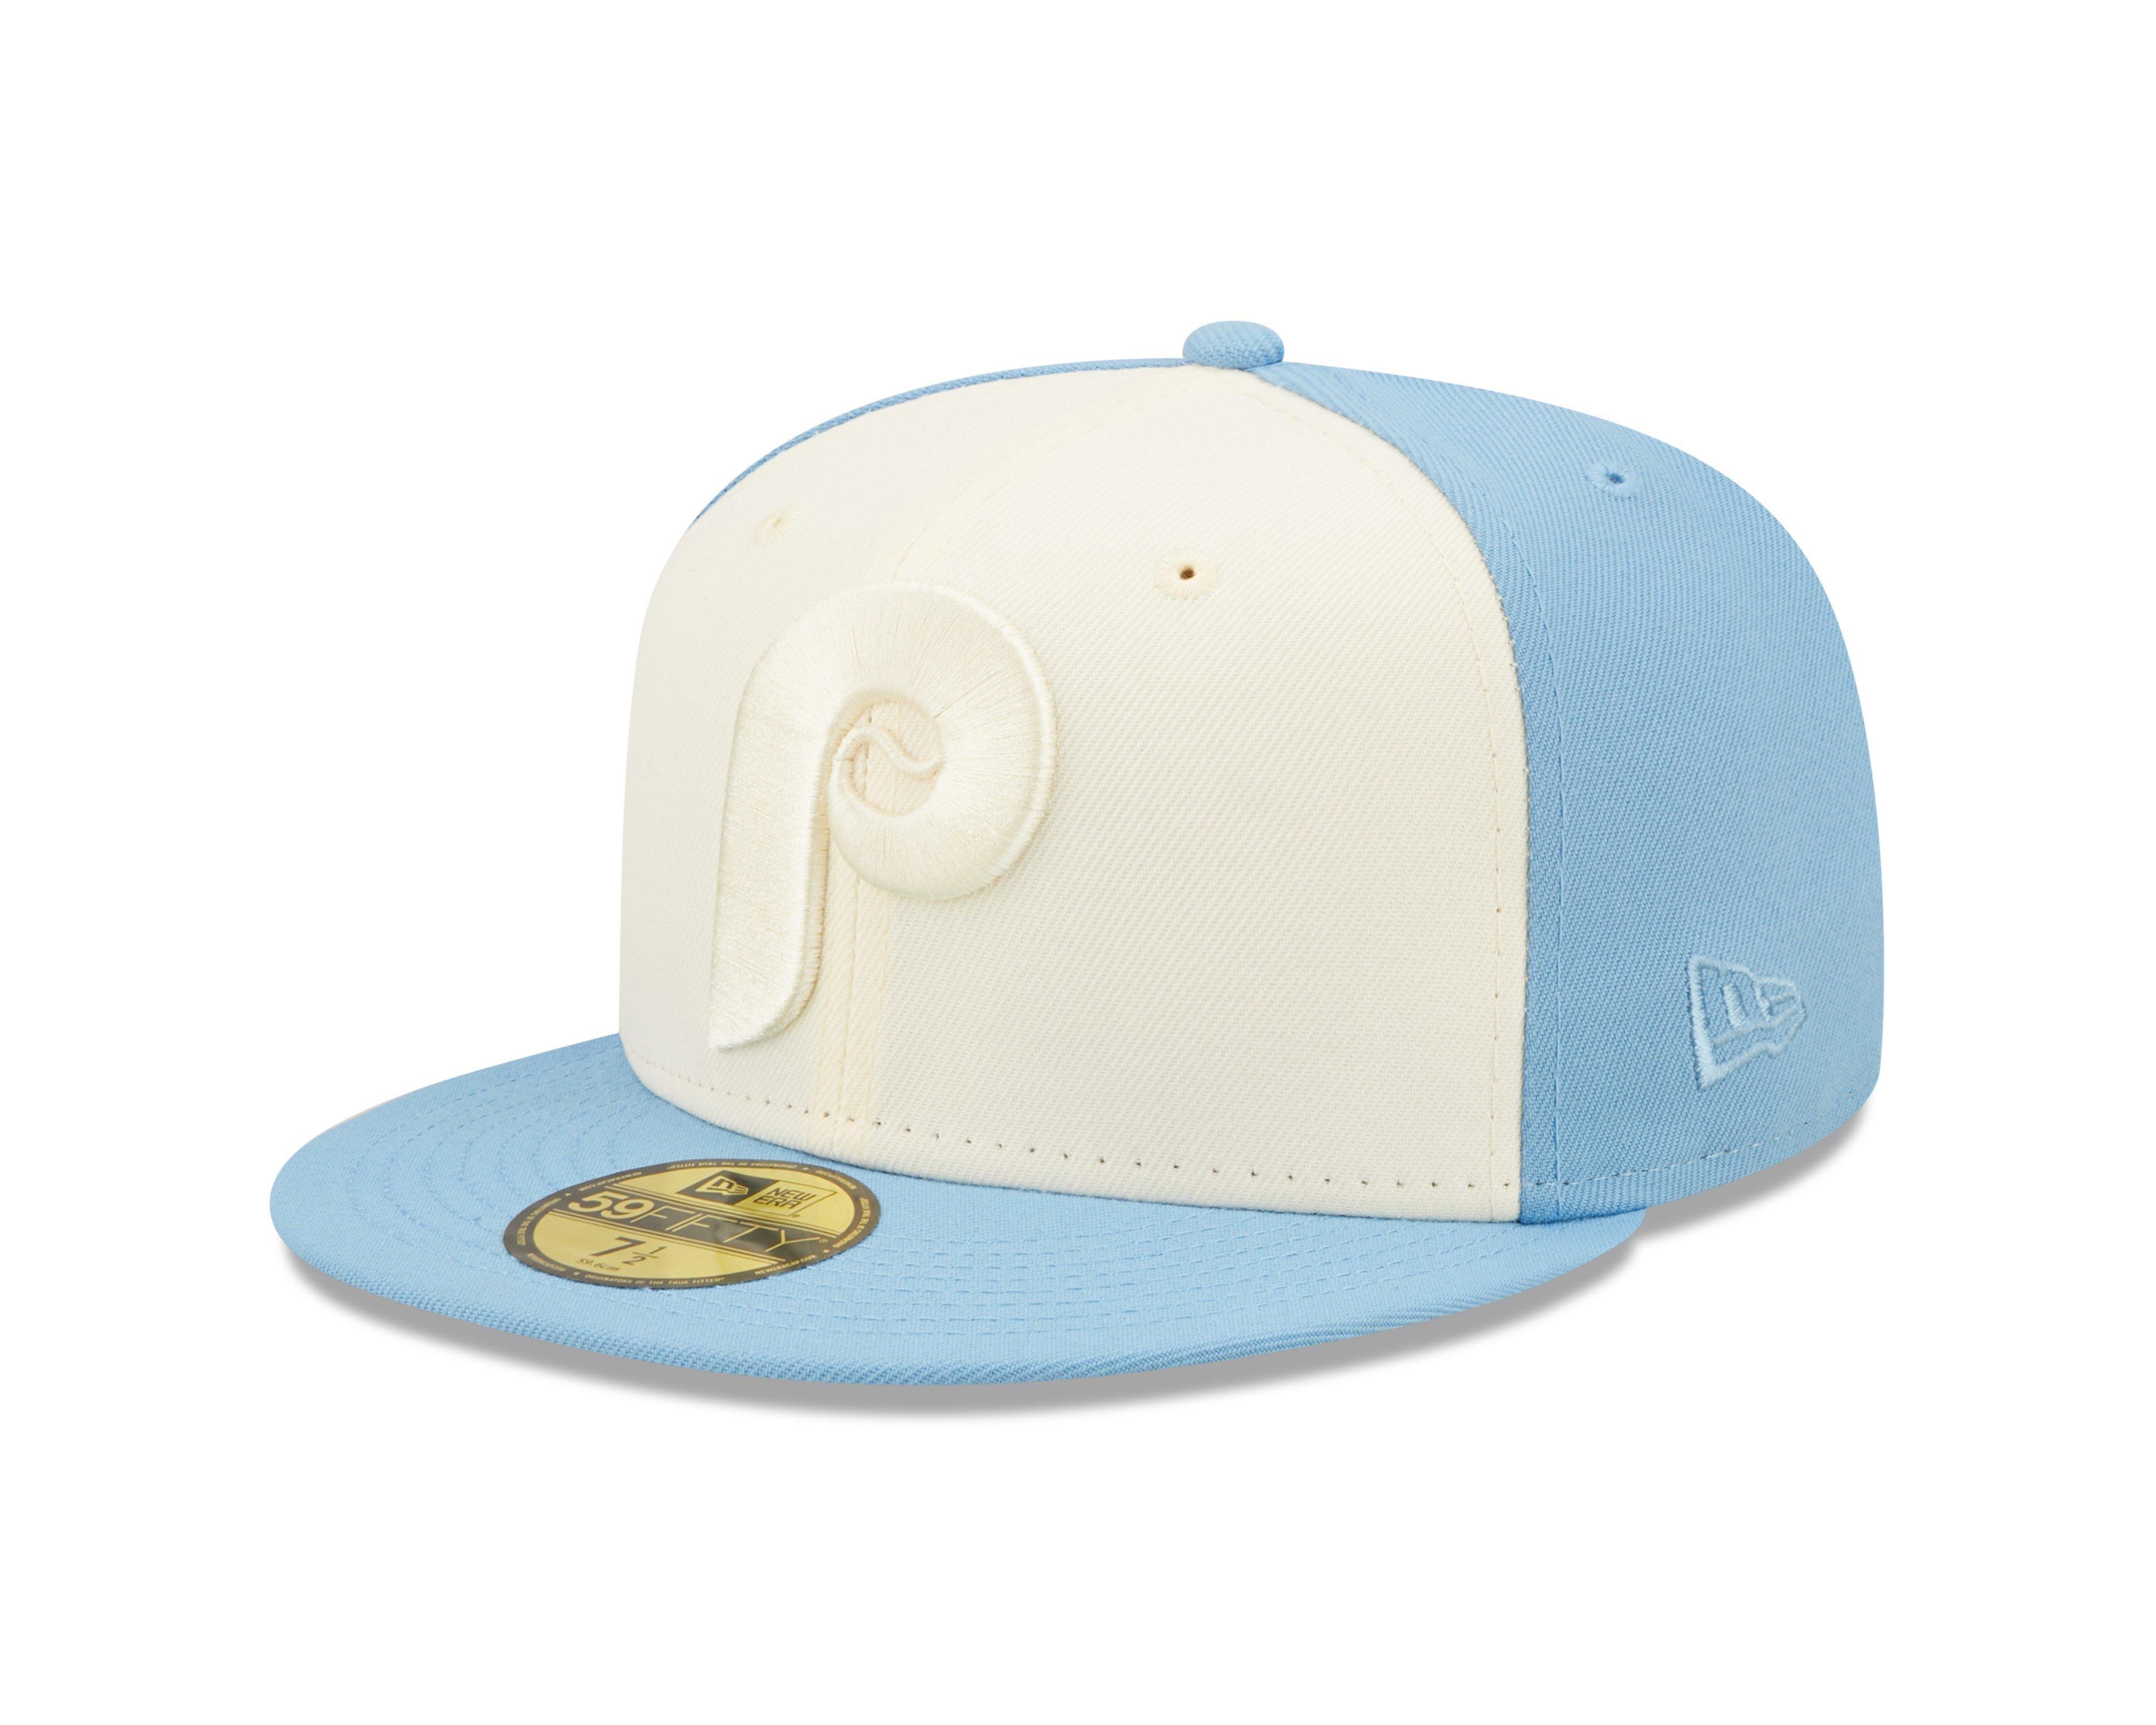 New Era, Accessories, Retro Throwback Phillies Hat